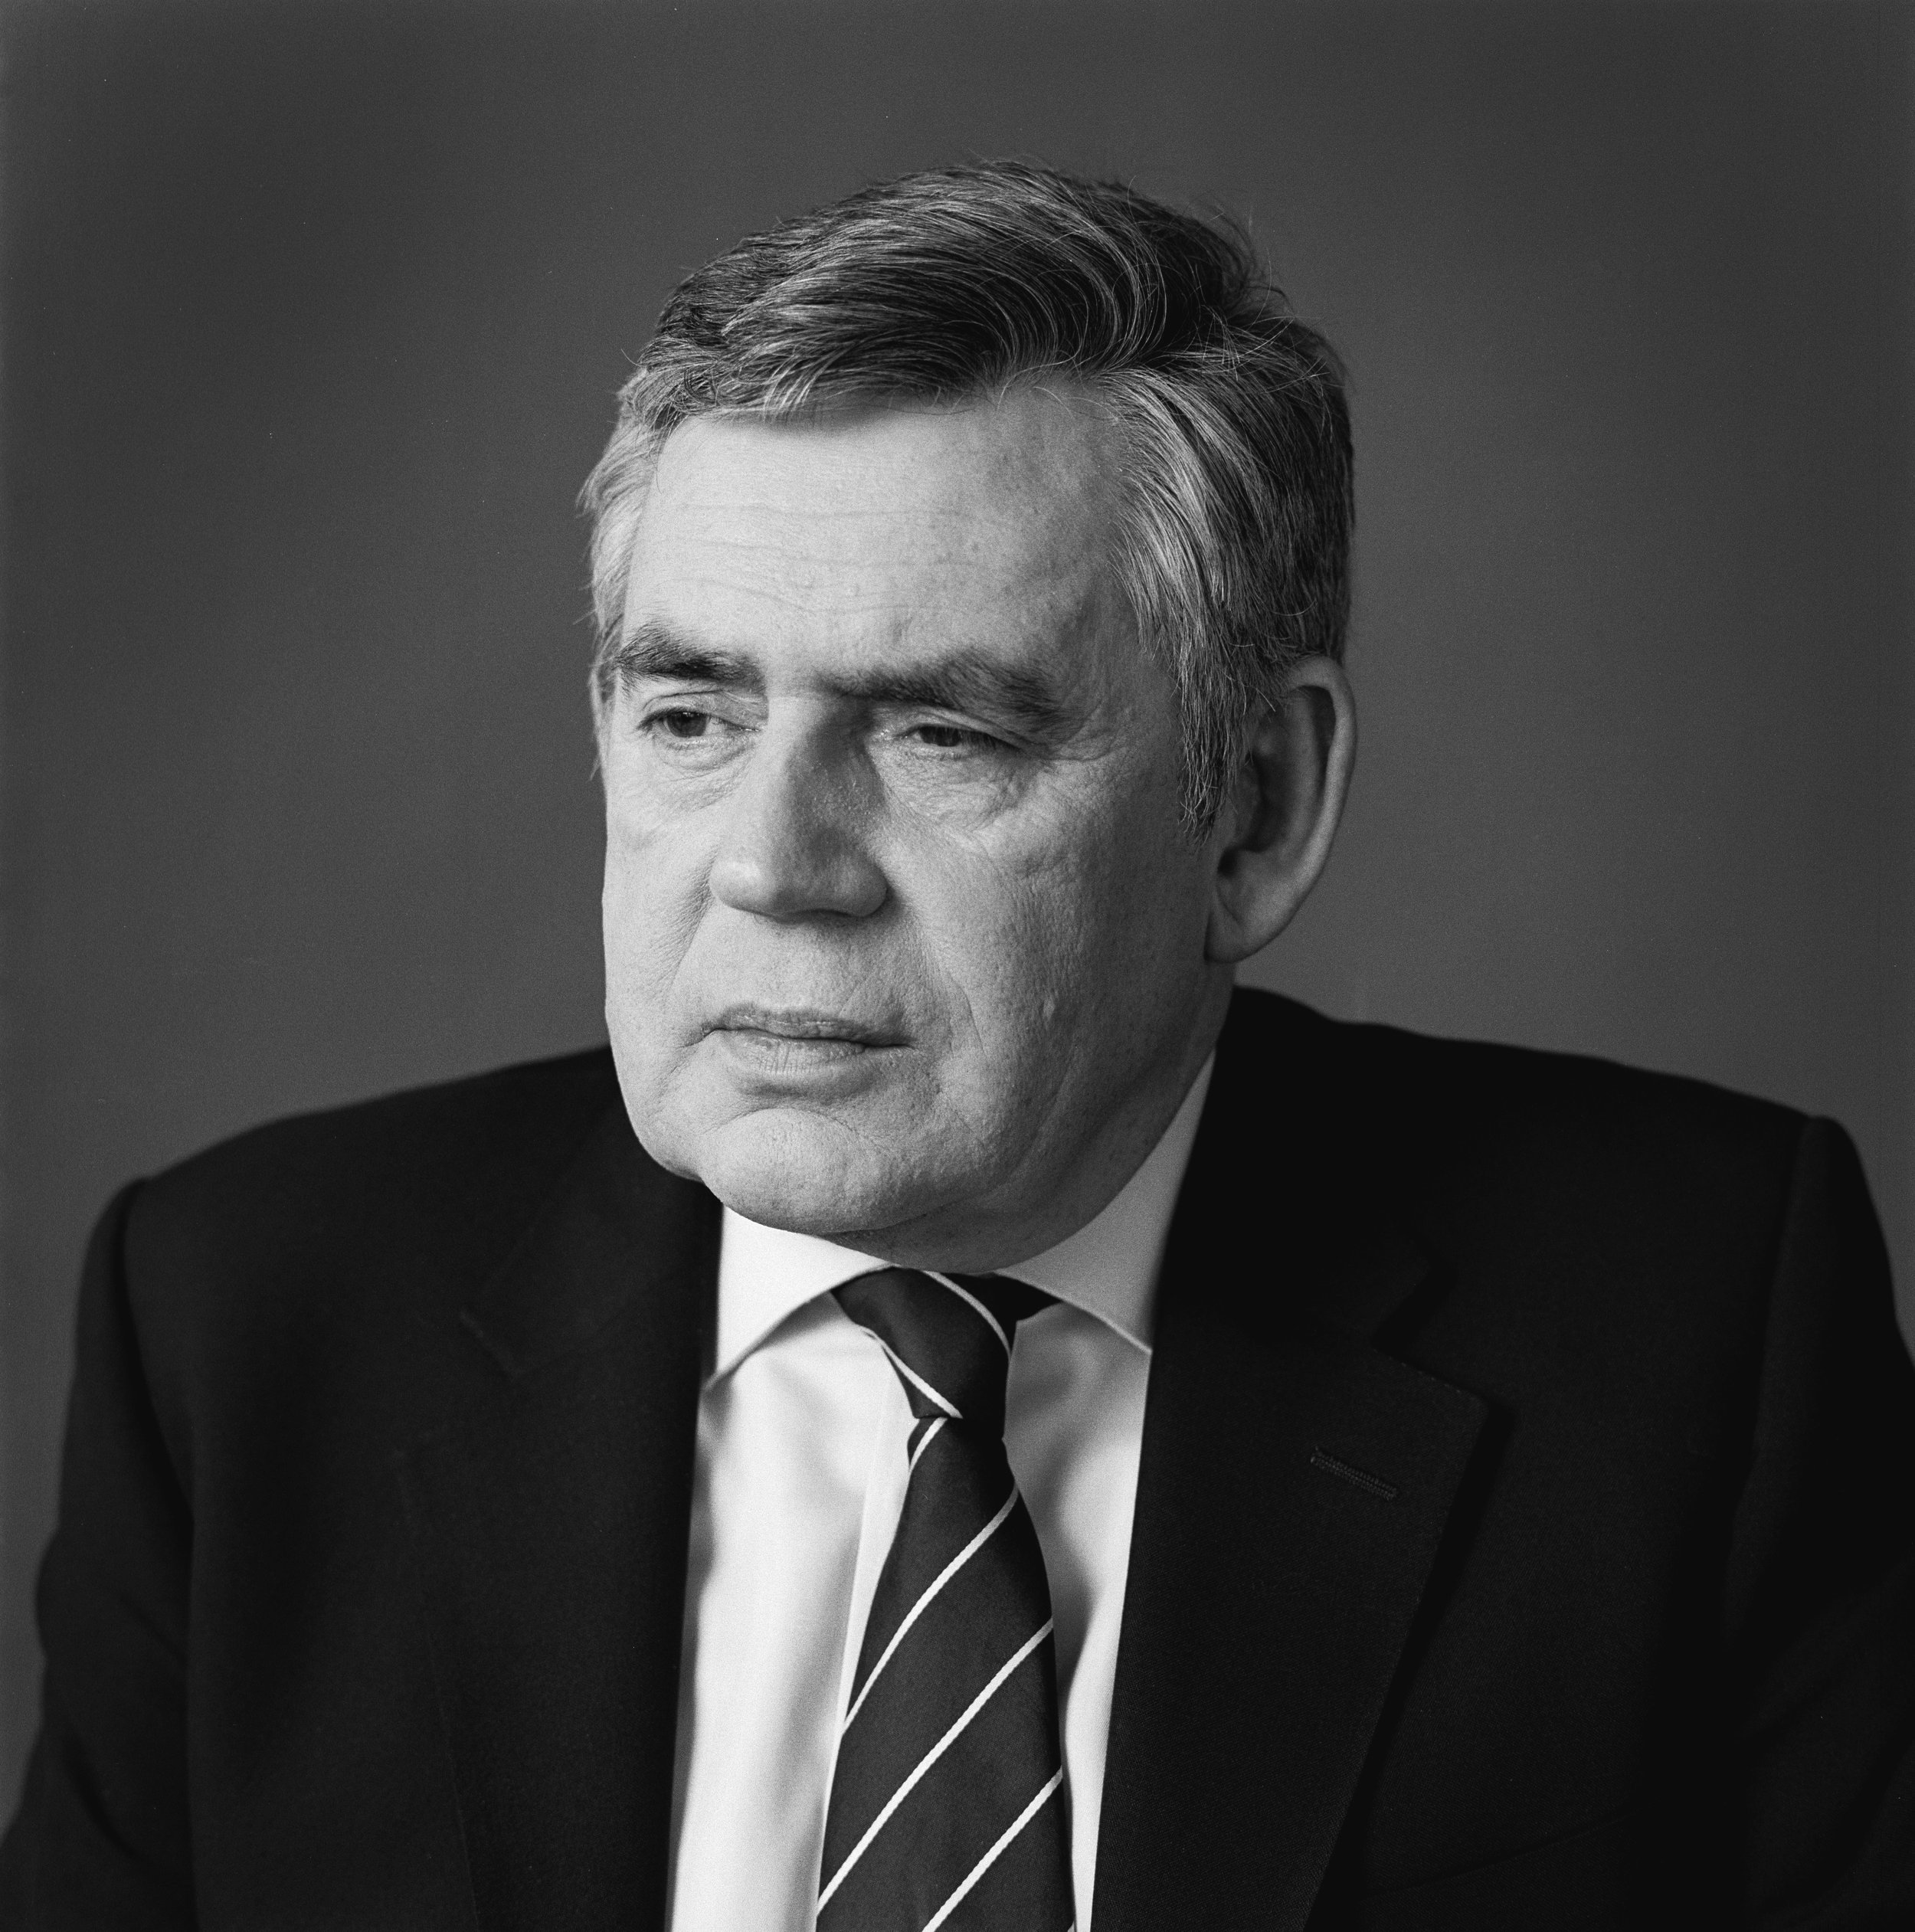  Gordon Brown  former Prime Minister of the UK 